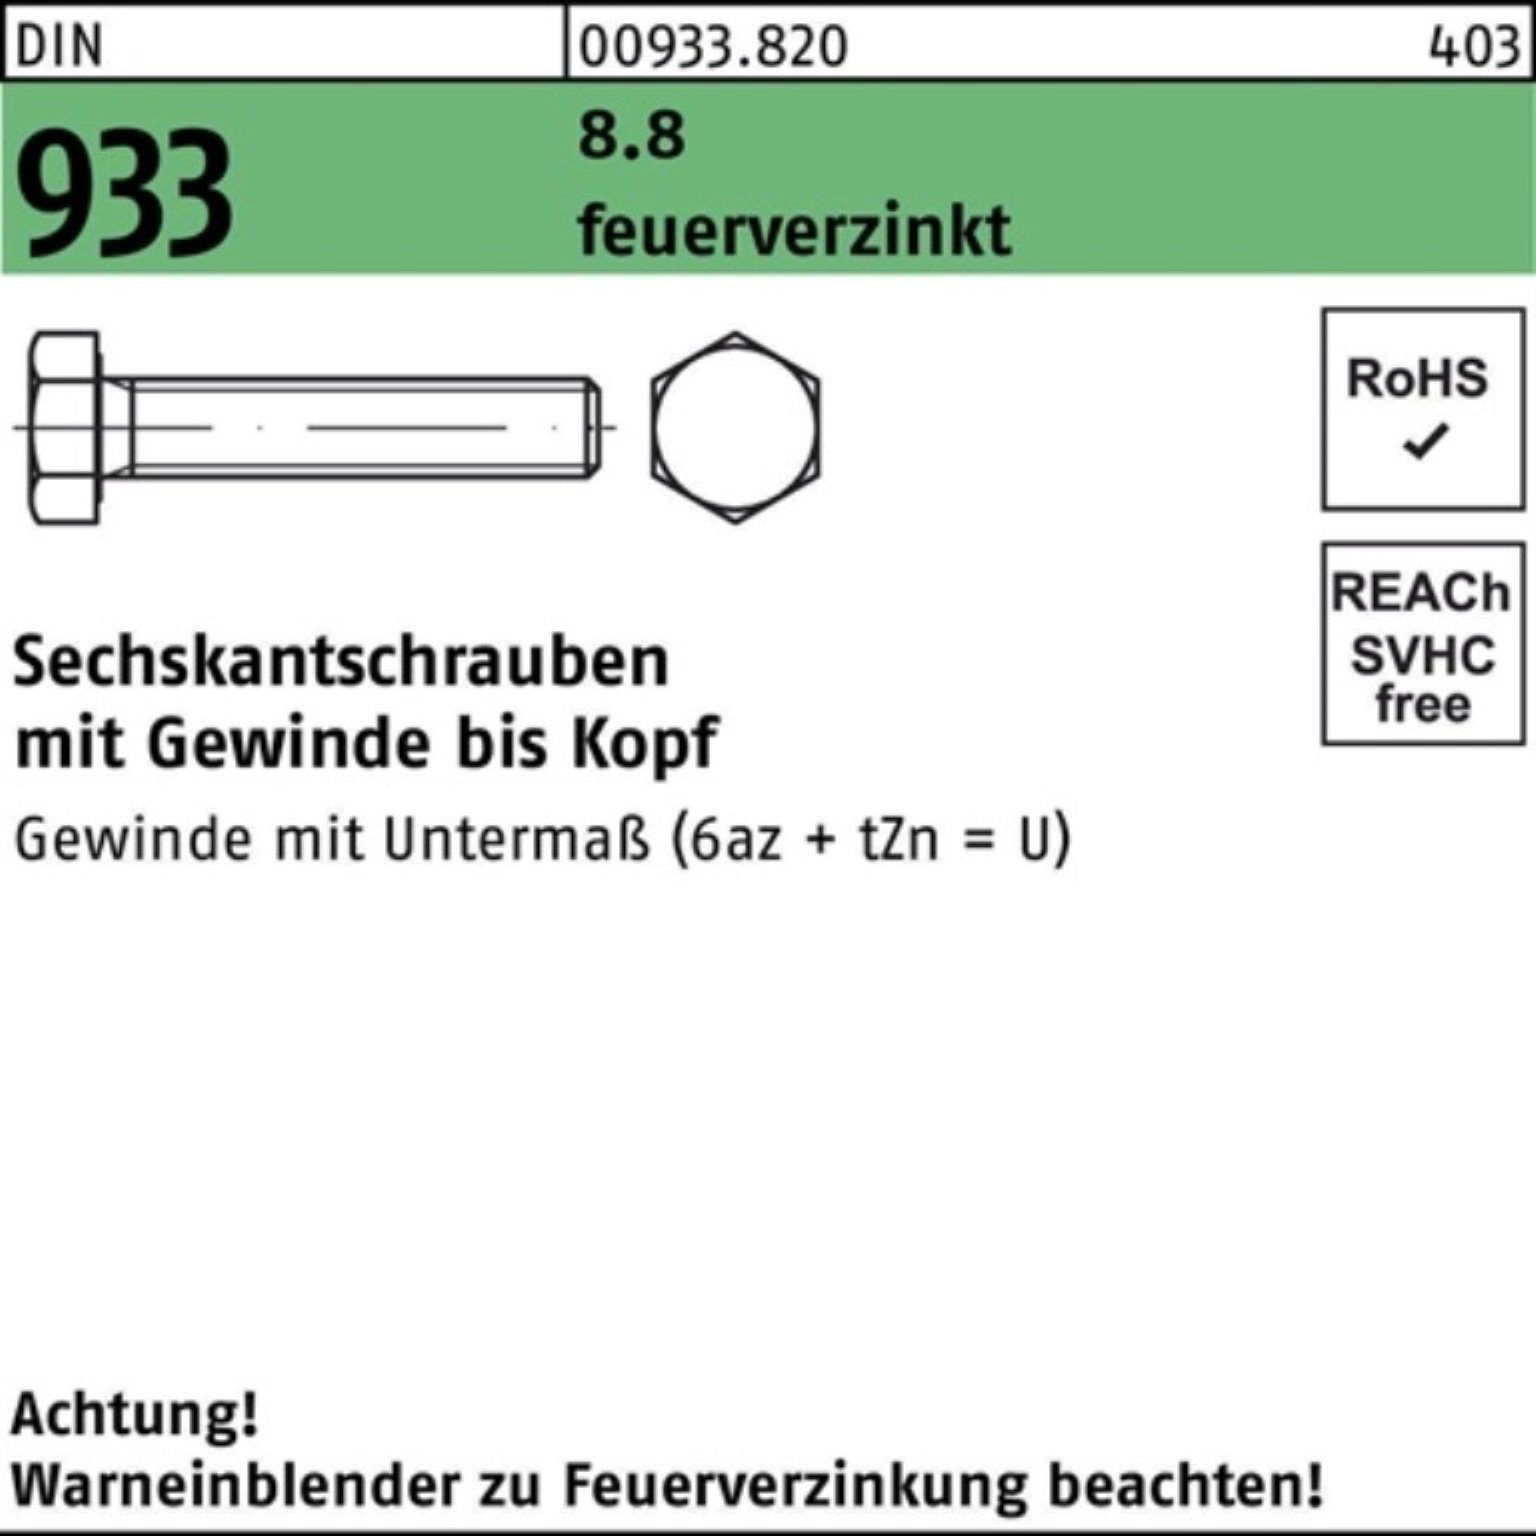 933 100er DIN feuerverz. Sechskantschraube Stü 8.8 Reyher M24x 25 Sechskantschraube VG 70 Pack